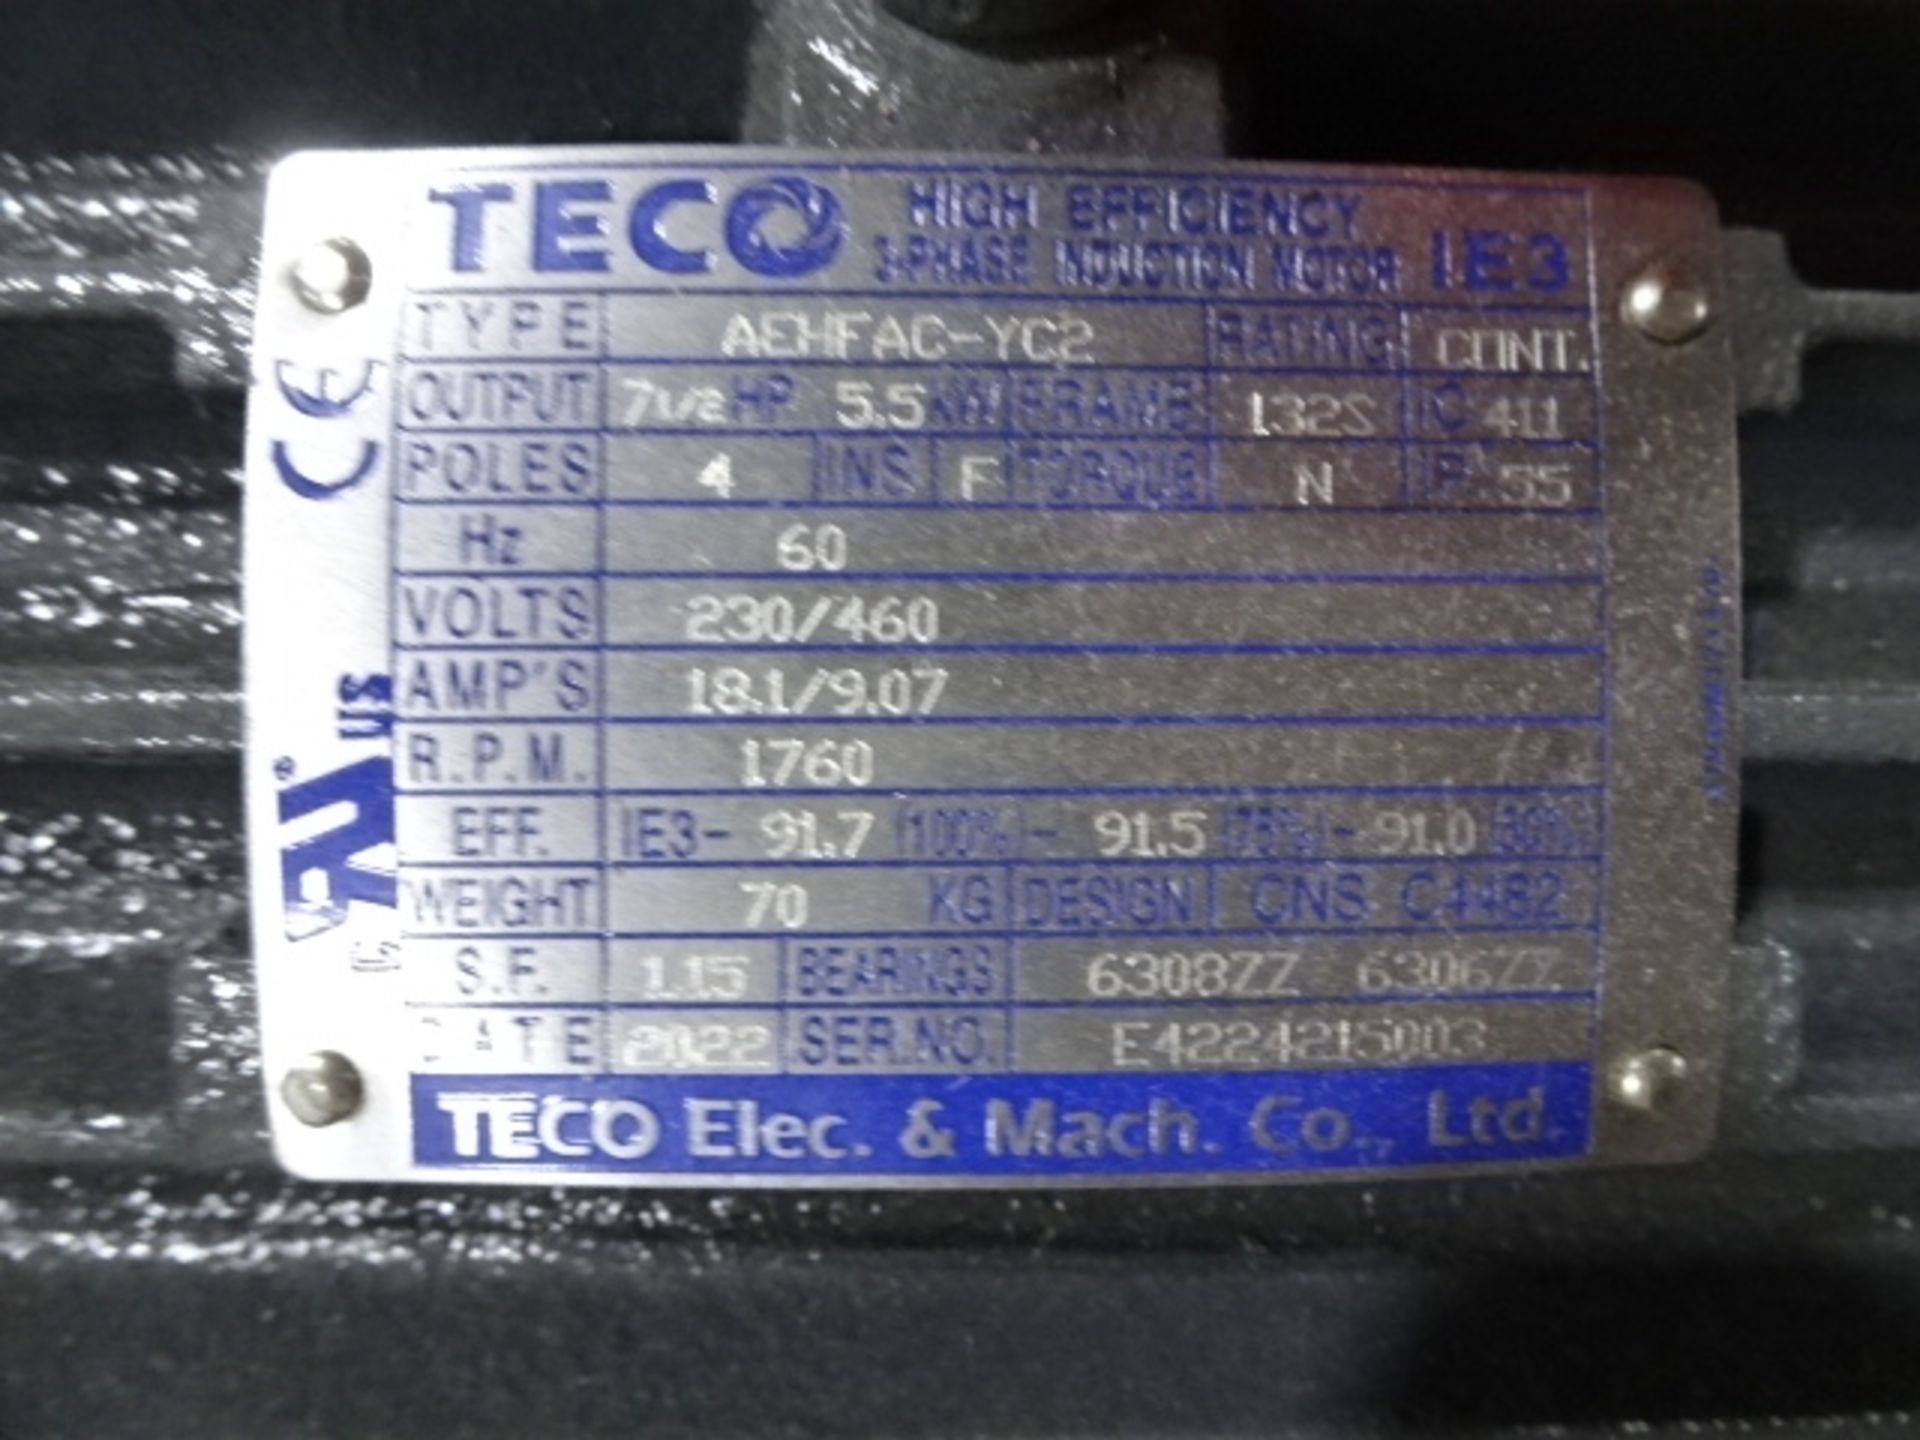 Teco Motor - Image 2 of 2